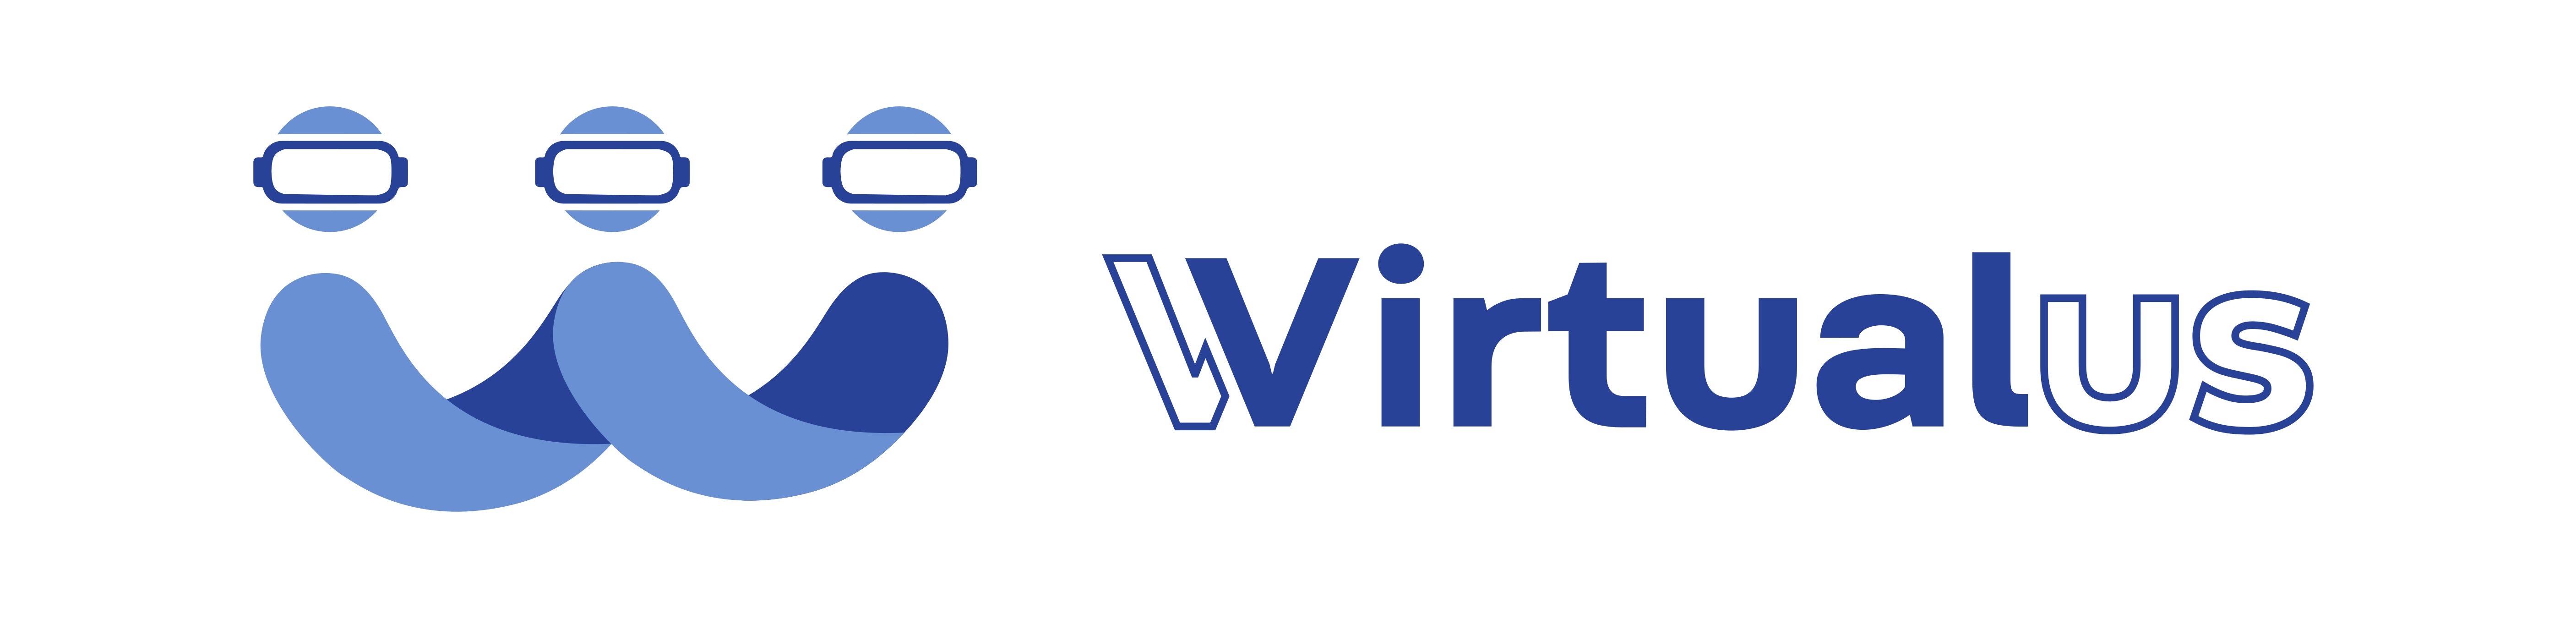 wirtualus_logo